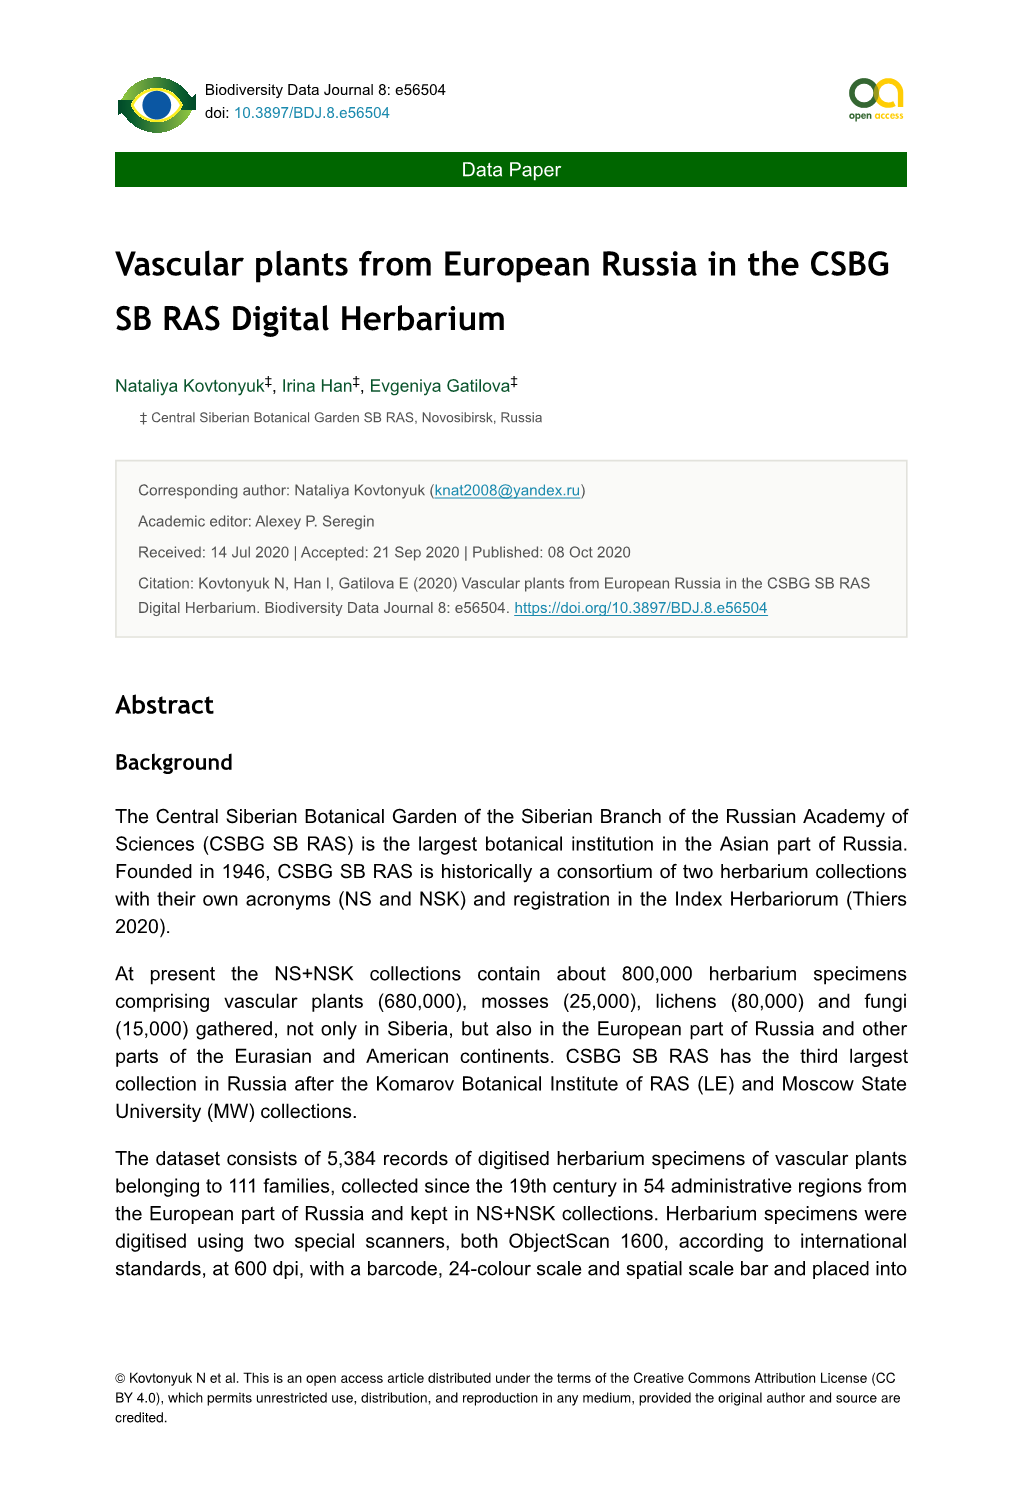 Vascular Plants from European Russia in the CSBG SB RAS Digital Herbarium